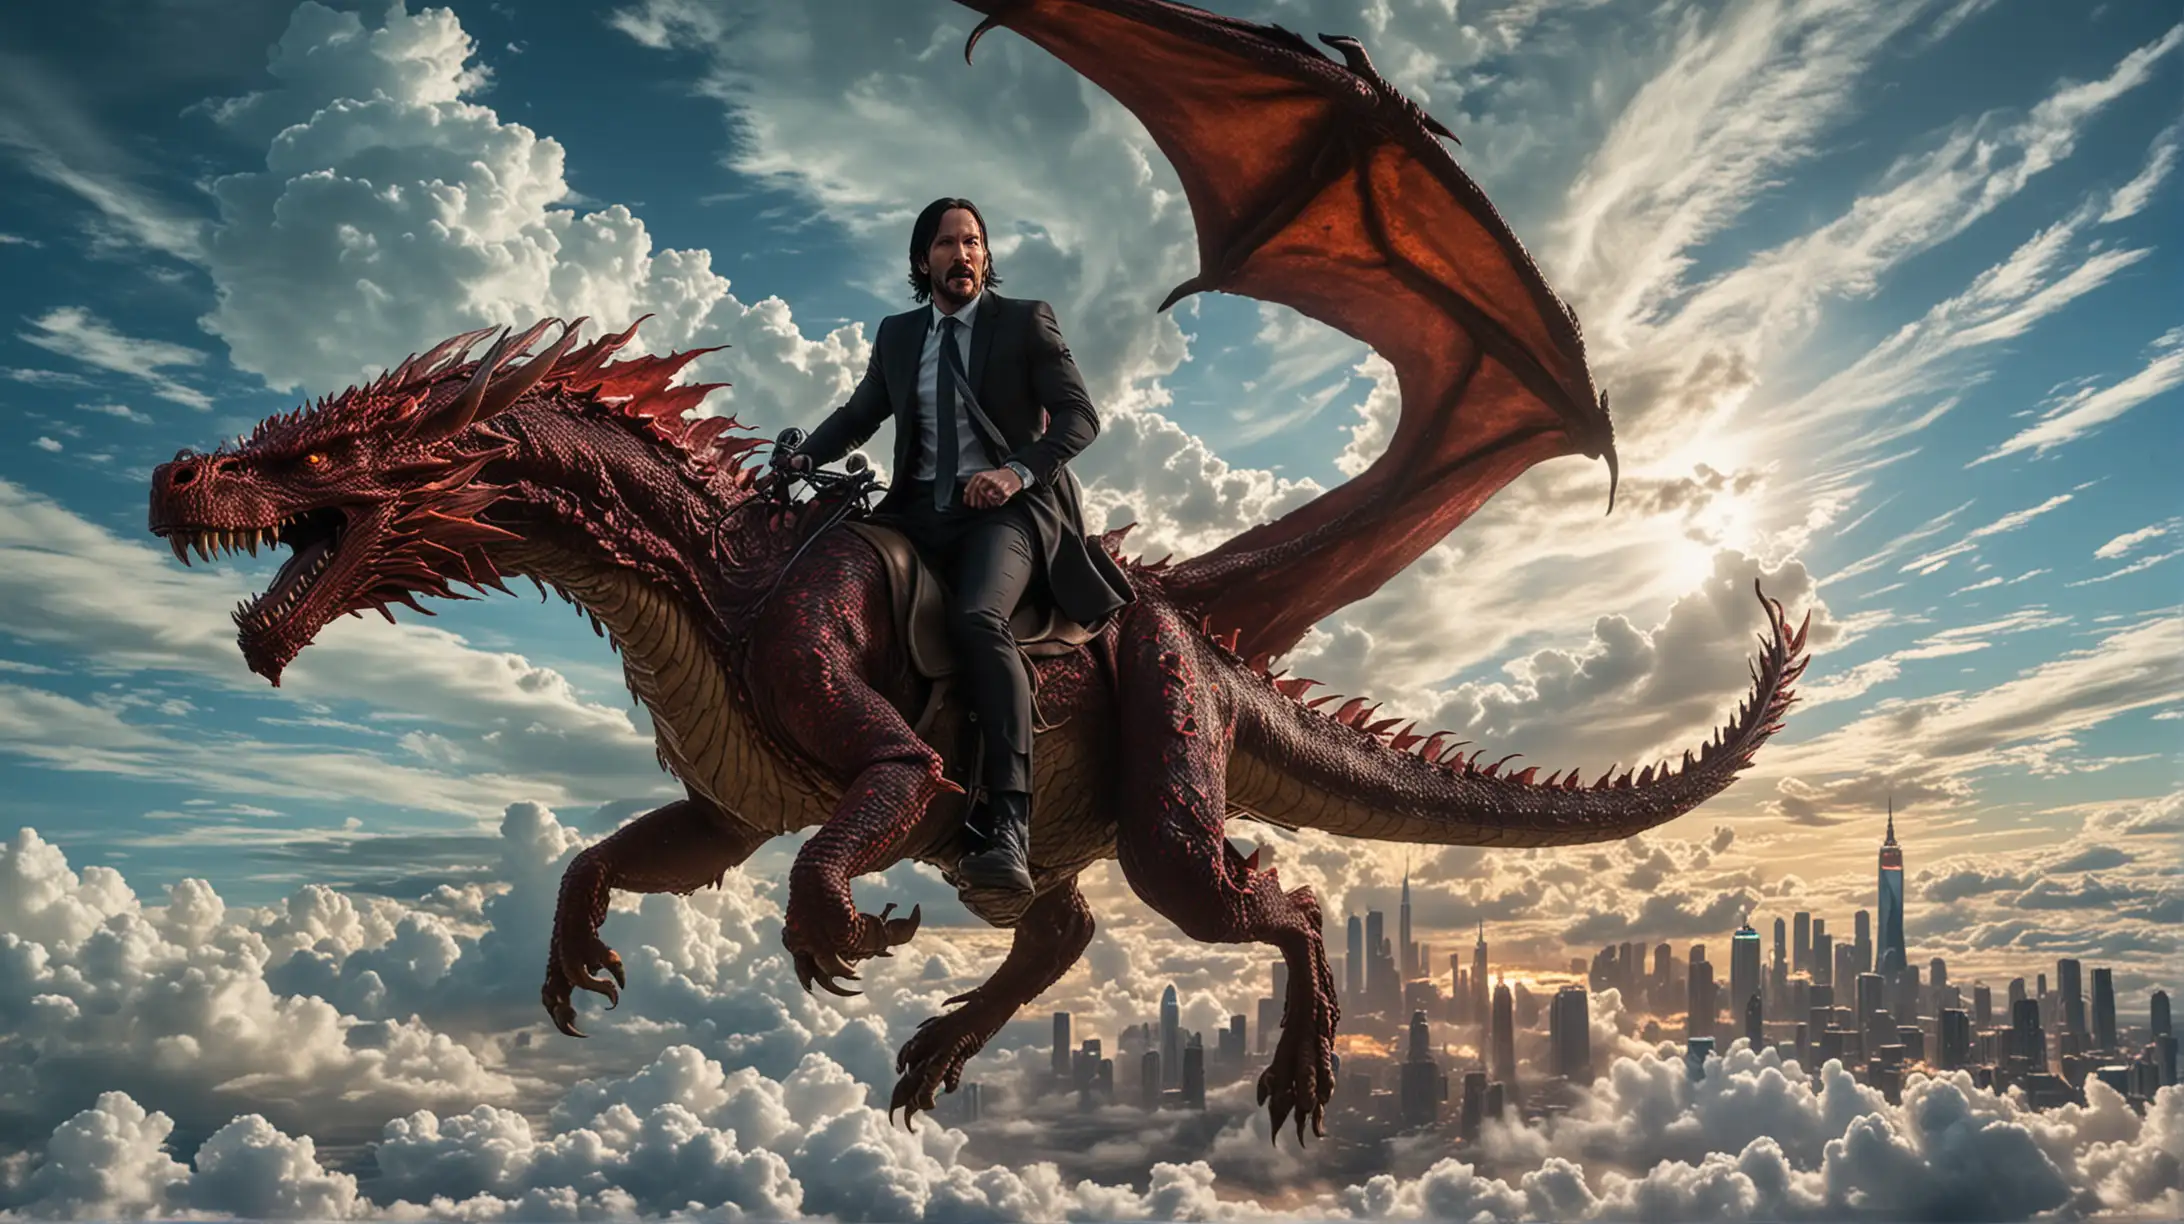 John Wick Riding Dragon in Sky Epic Fantasy Adventure Artwork